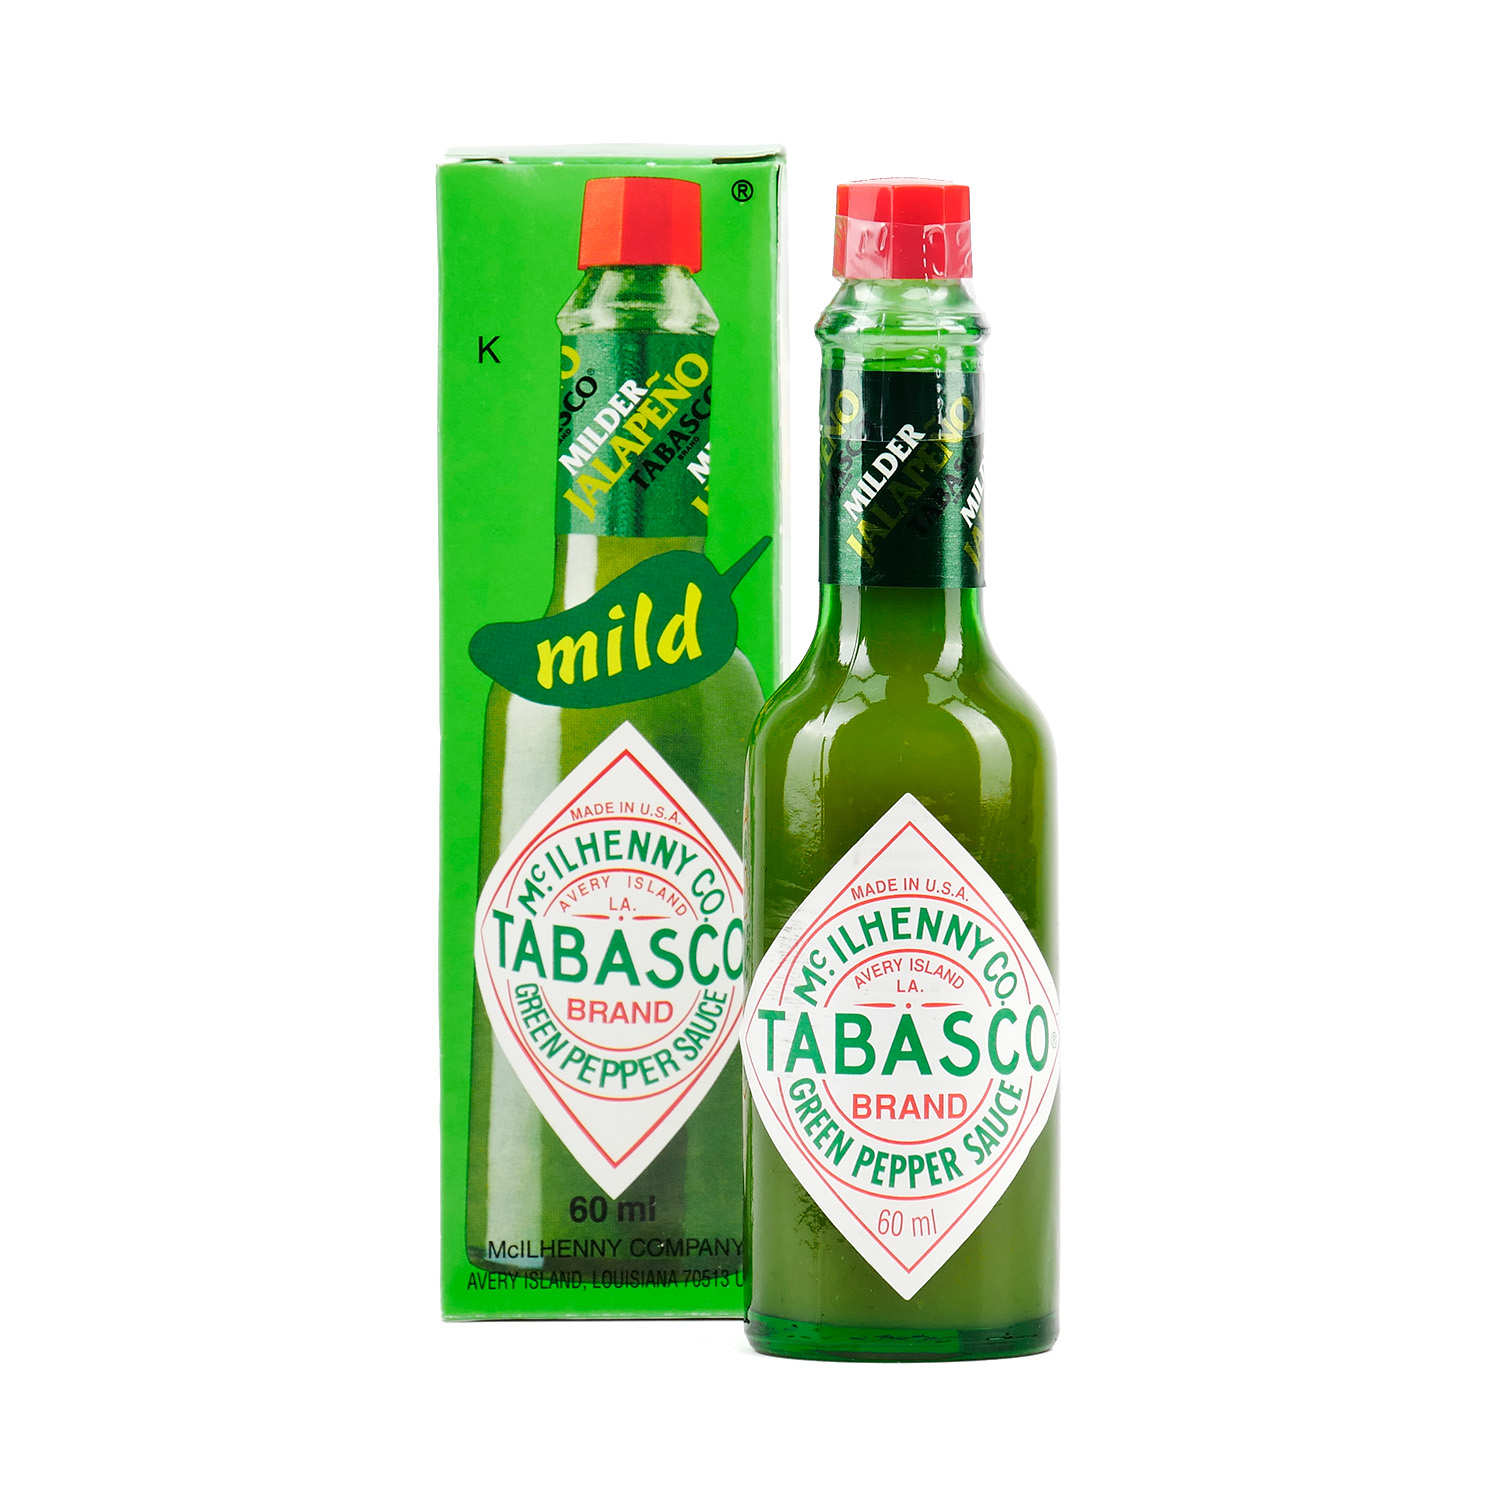 Tabasco vert Jalapeño - Mc Ilhenny - Tabasco brand